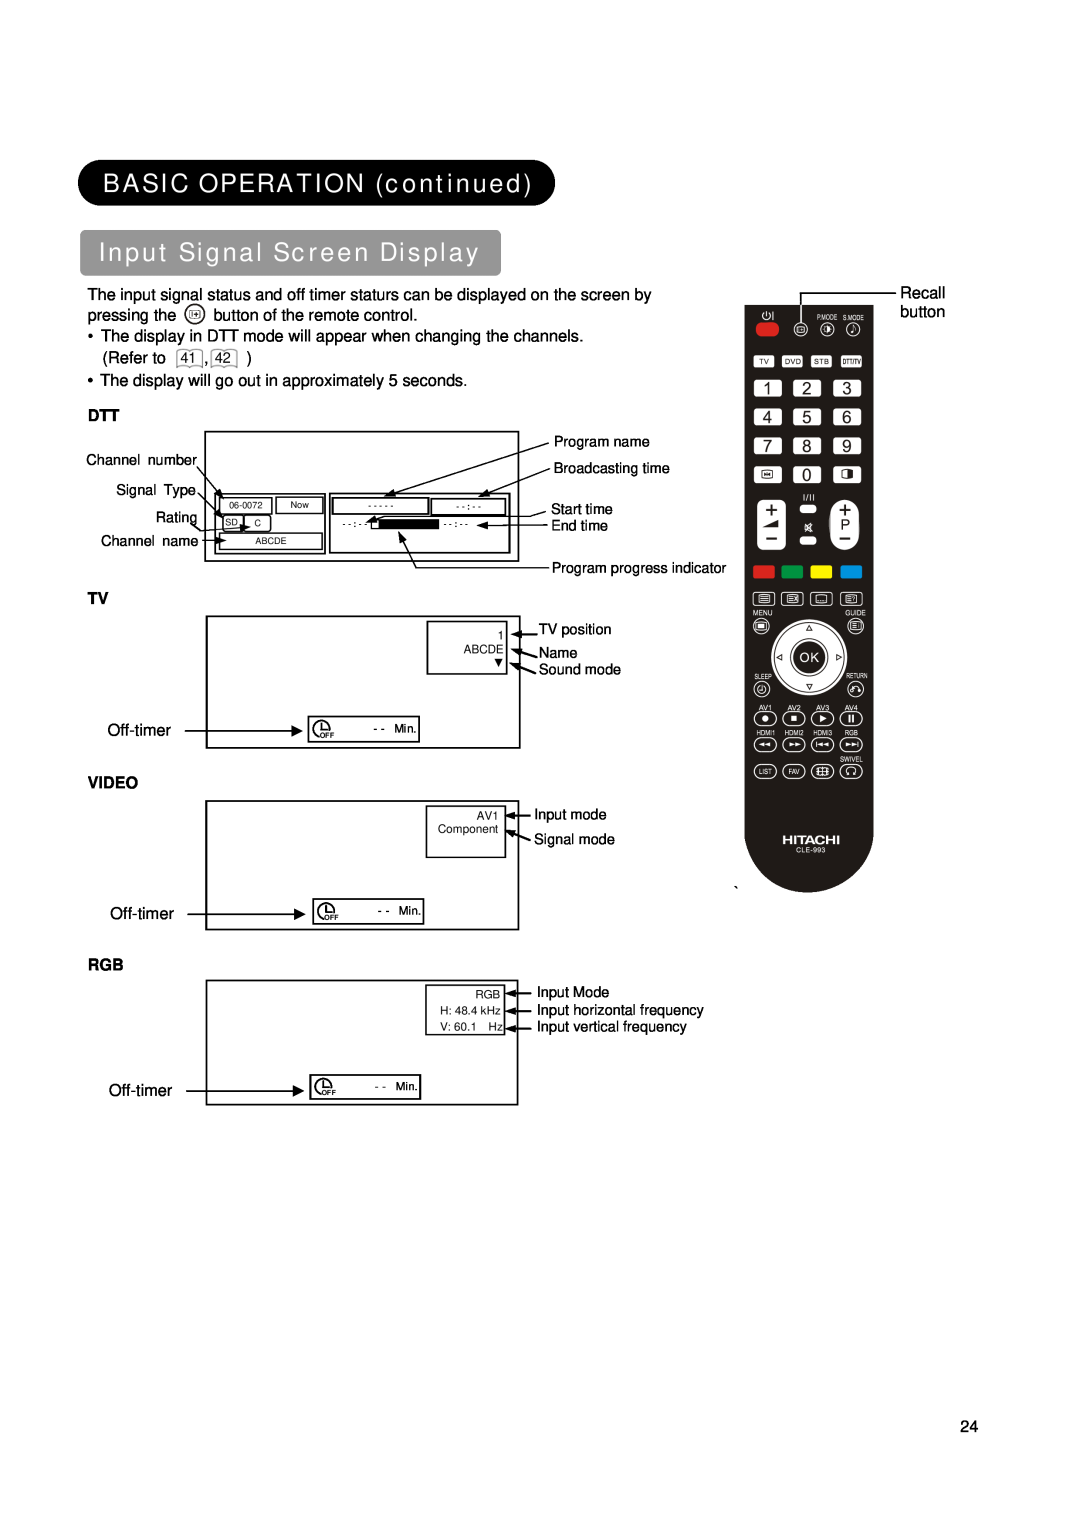 Hitachi L42X01AU, L37X01AU manual BASIC OPERATION continued Input Signal Screen Display, Video, Off-timer 